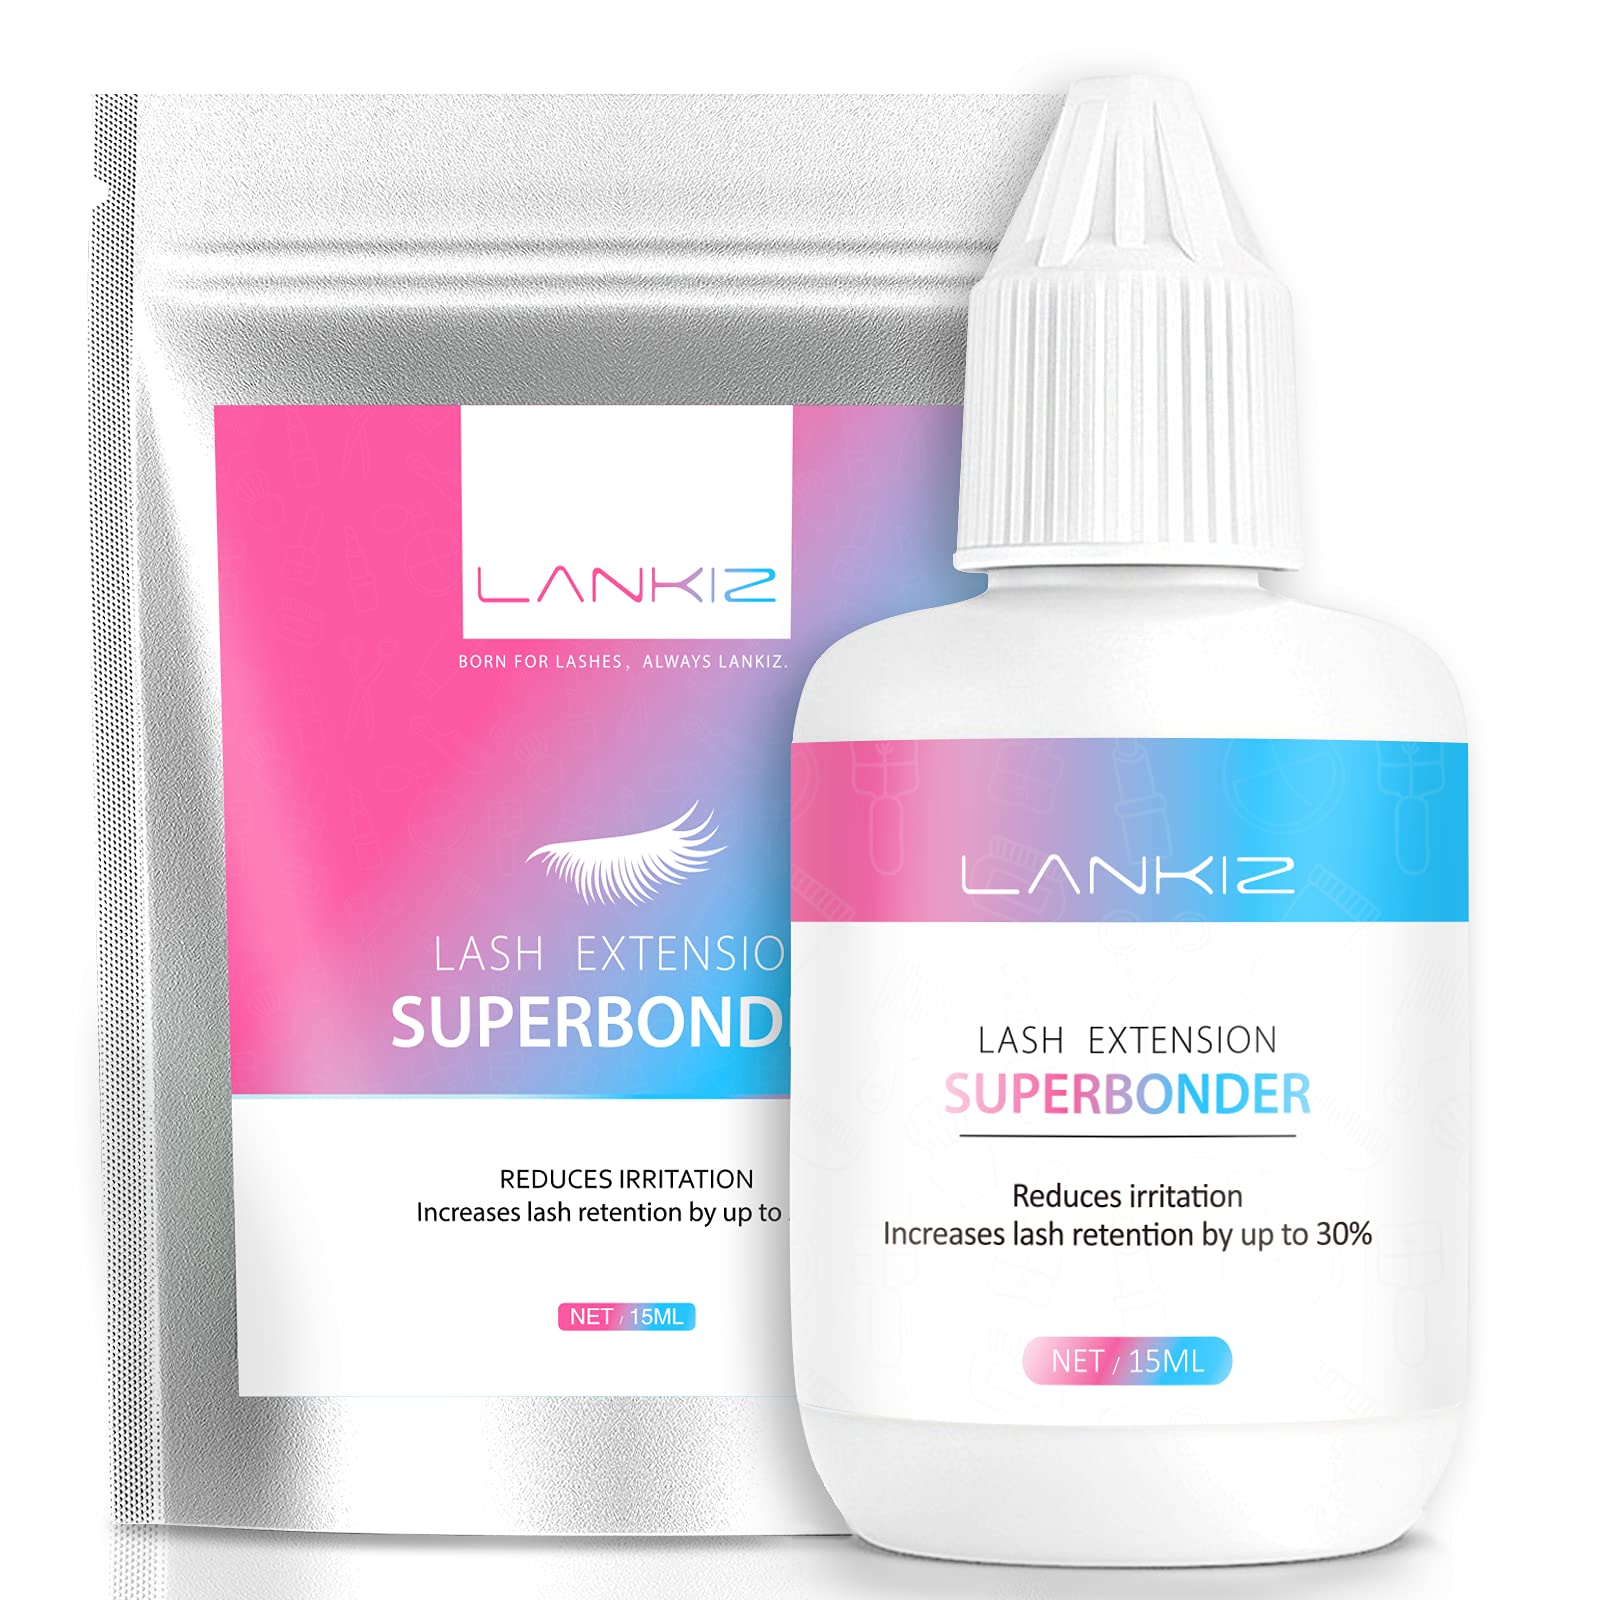 LANKIZ Lash Bonder For Eyelash Extension Glue, Eyelash Extension Bonder, Superbonder Sealant, Reduces Irritation, Increas Lash Retention by up to 30%, 0.5oz/15ml…